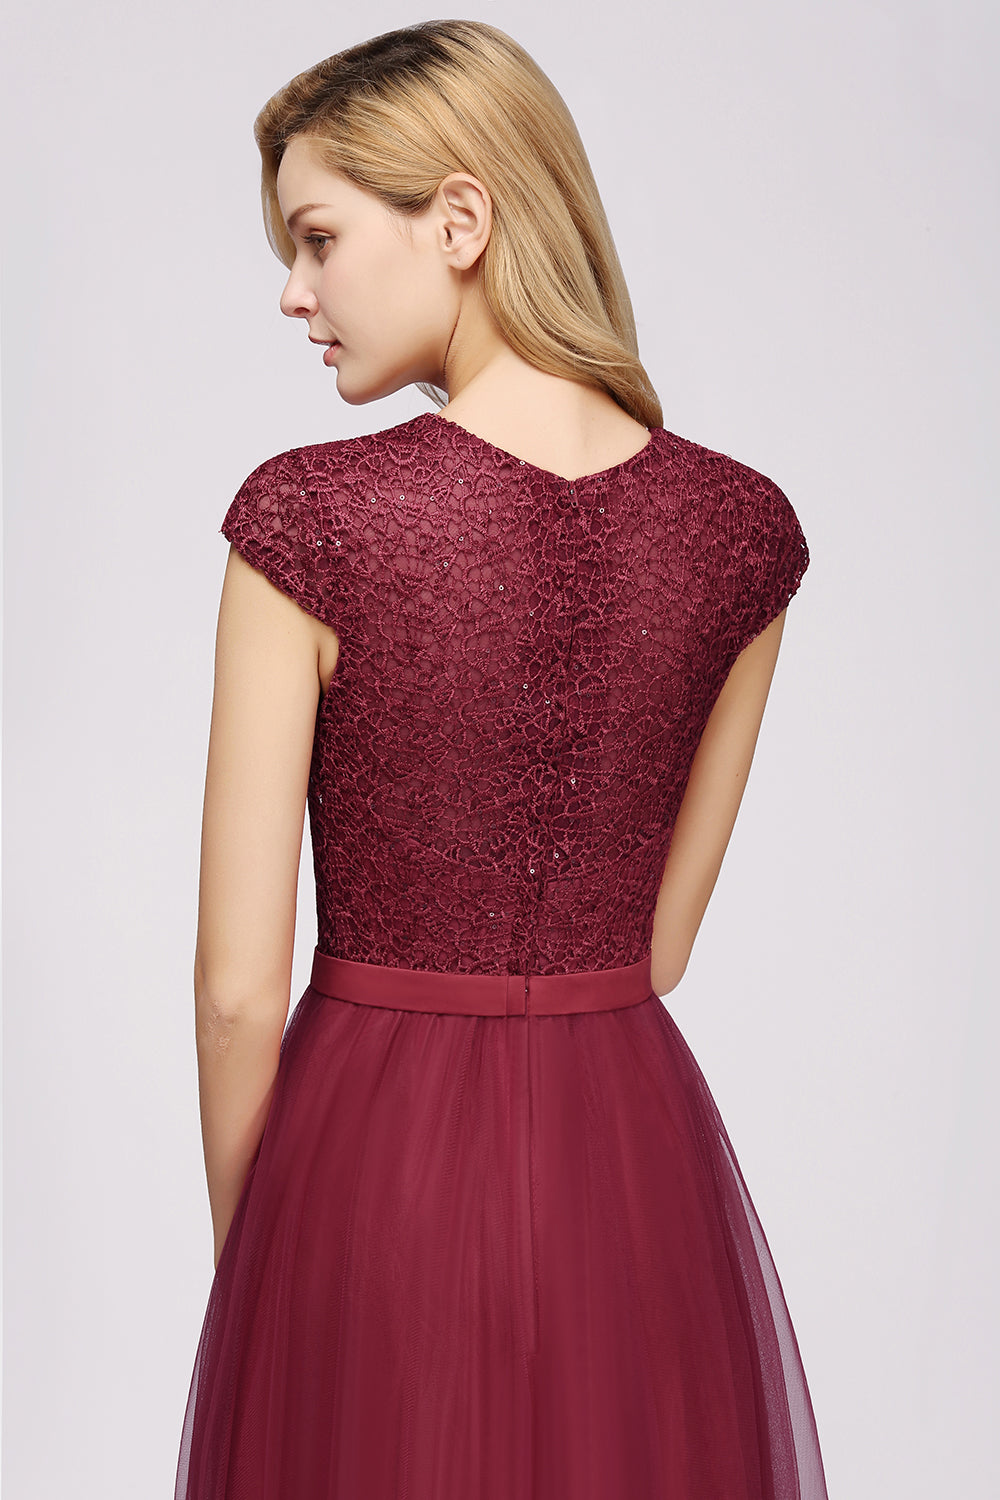 Elegant Lace Cap-Sleeves Long Burgundy Birdesmaid Dresses Online